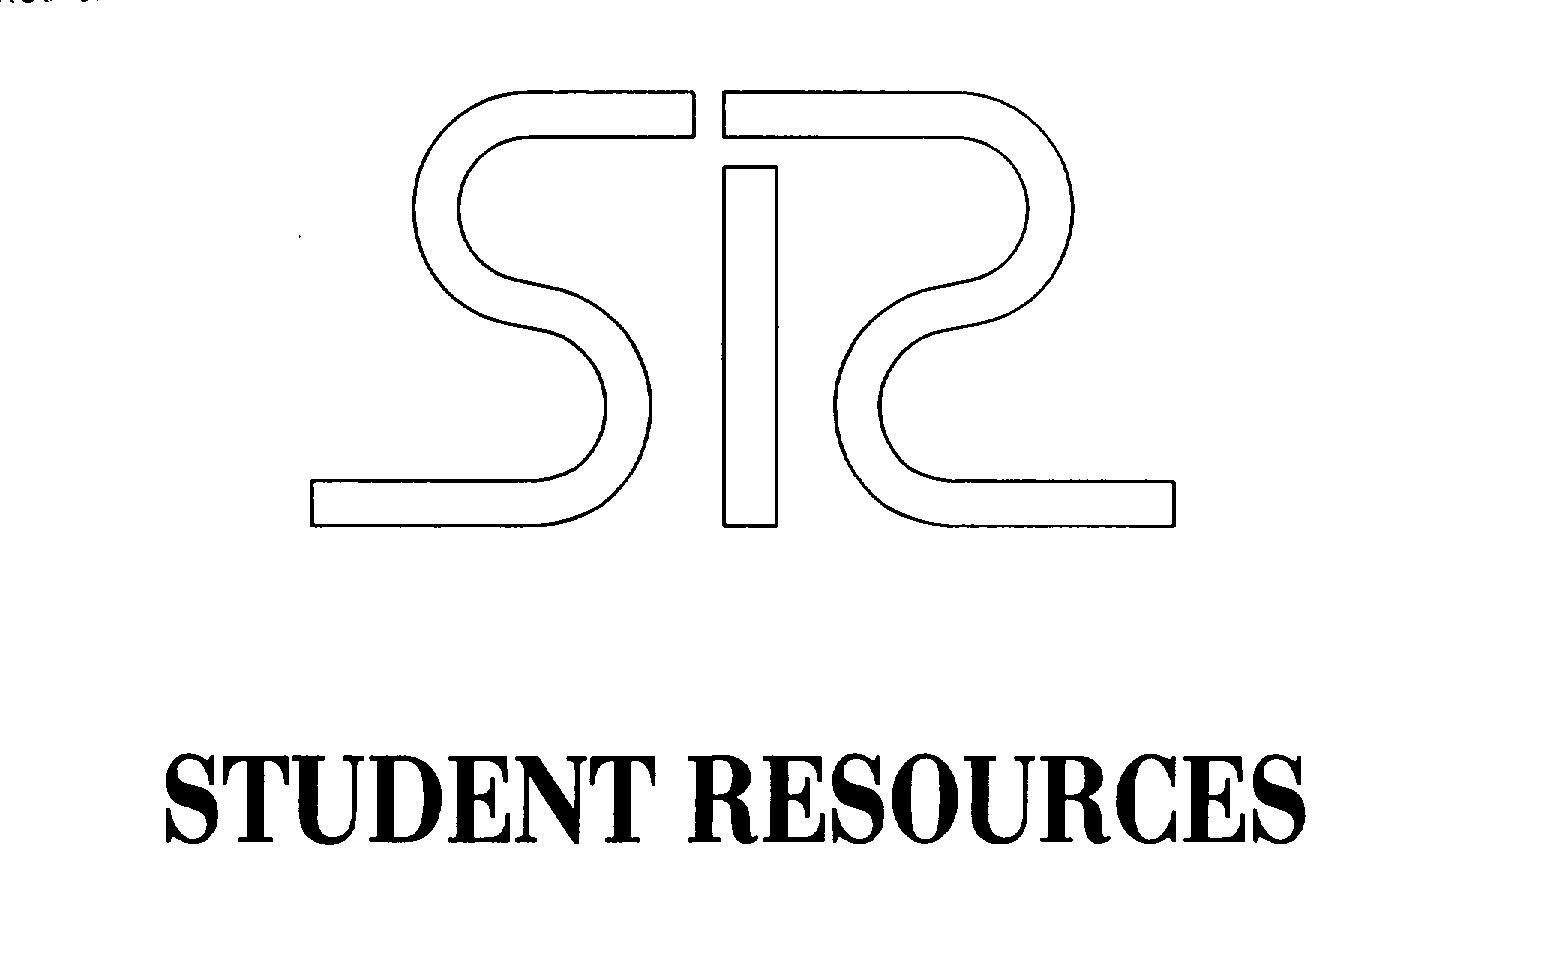  SR STUDENT RESOURCES